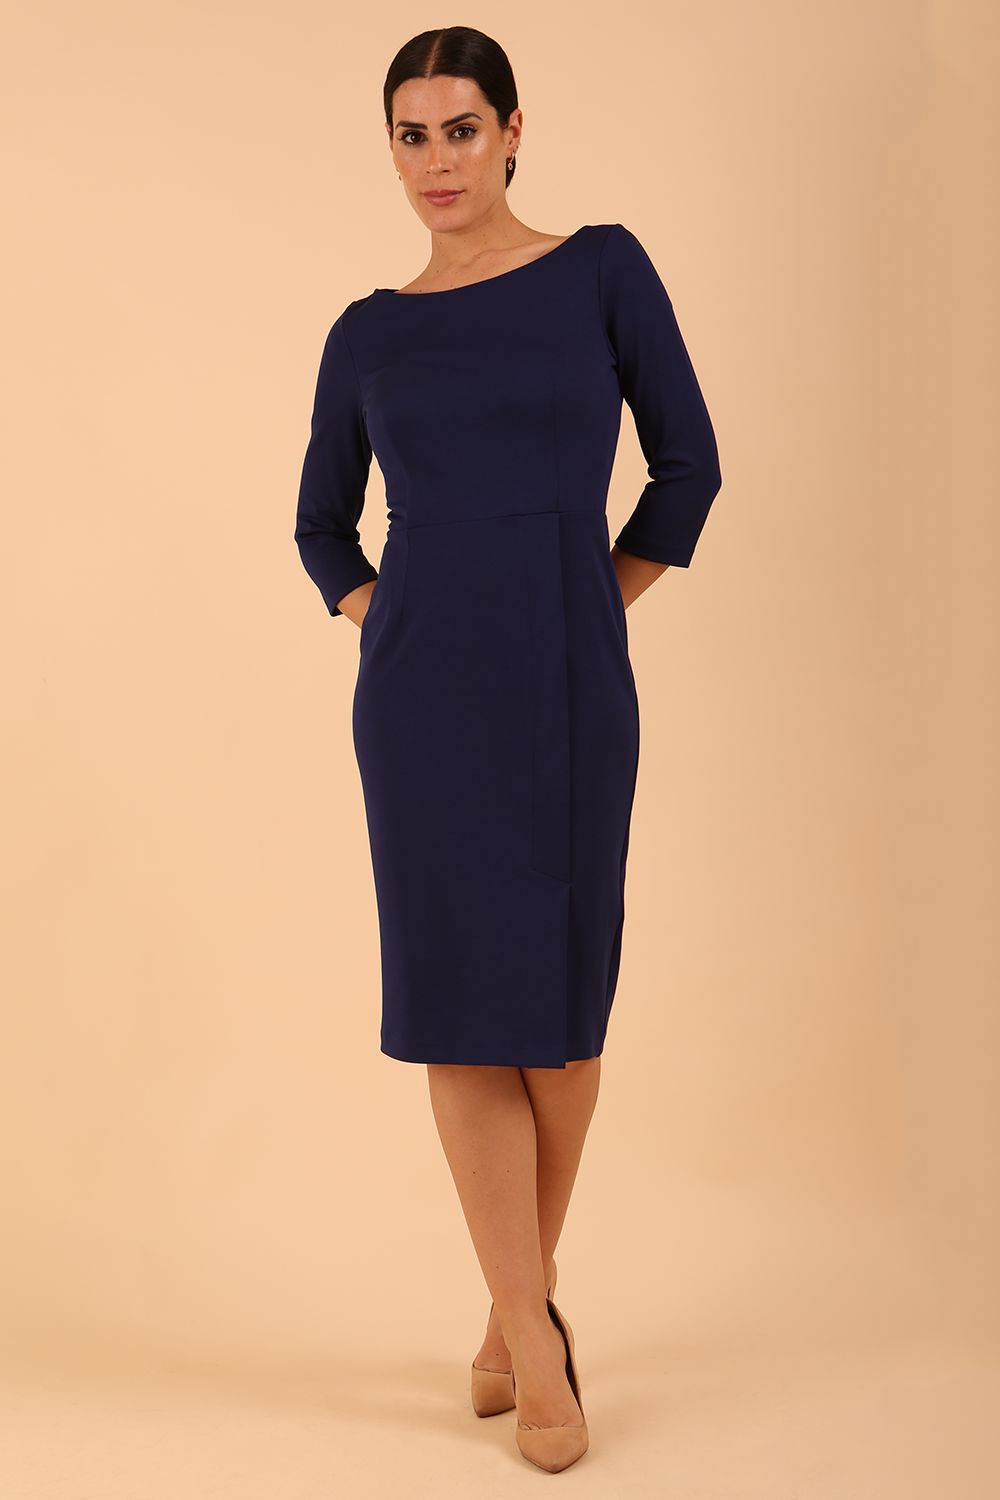 Model wearing diva catwalk Kinga 3/4 Sleeve pencil skirt dress in Navy Blue colour